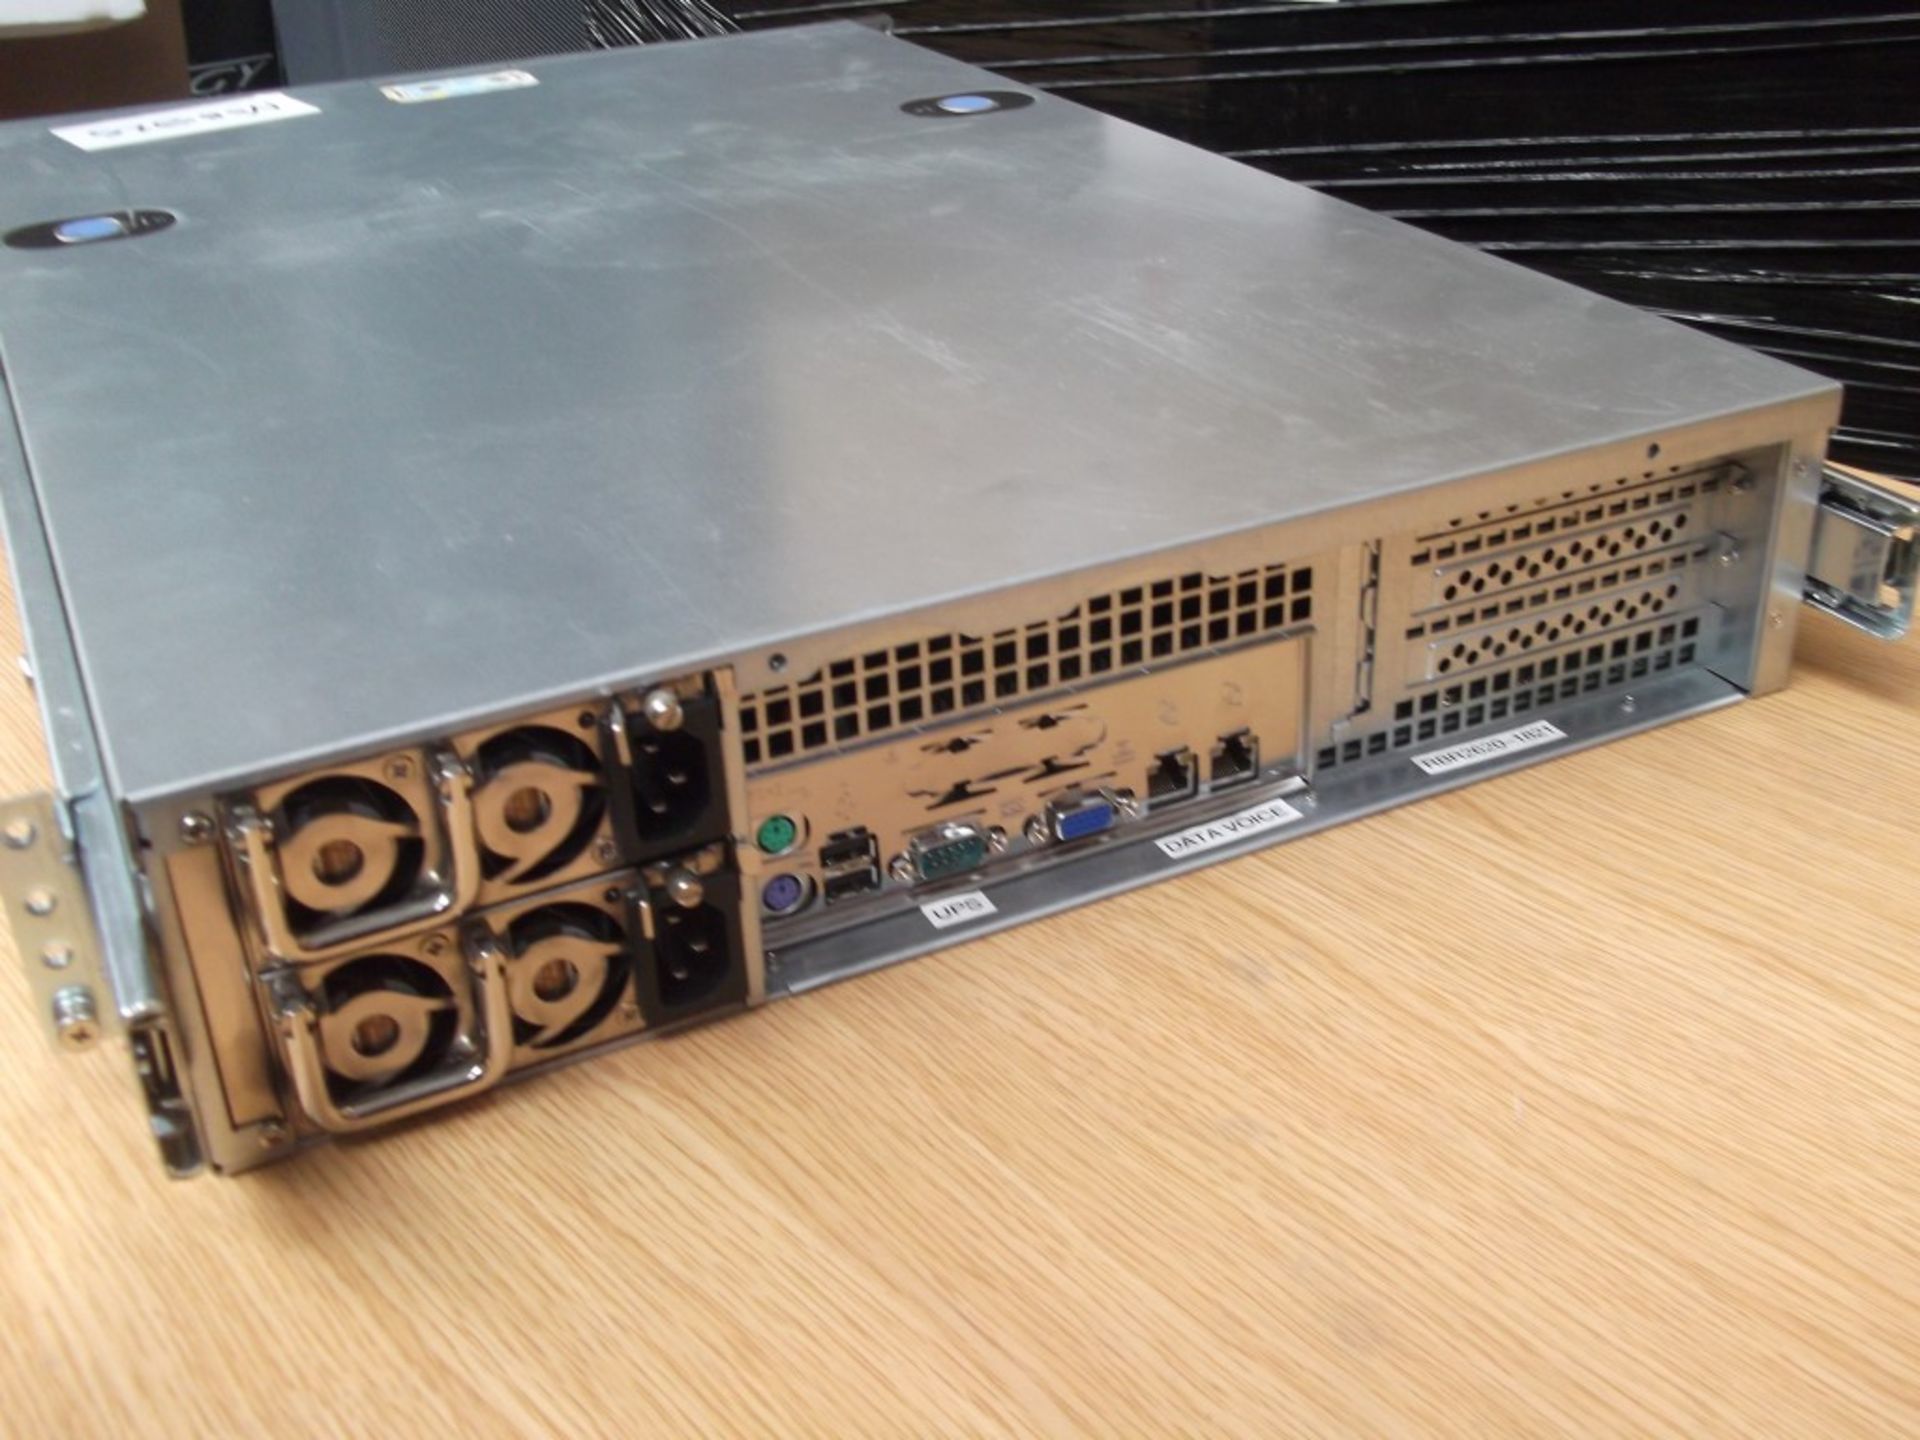 1 x Redbox Recorder - Enterprise IPT / Voice Recording Rackmount Server - Model RBR 2620 - Core 2 - Image 4 of 5